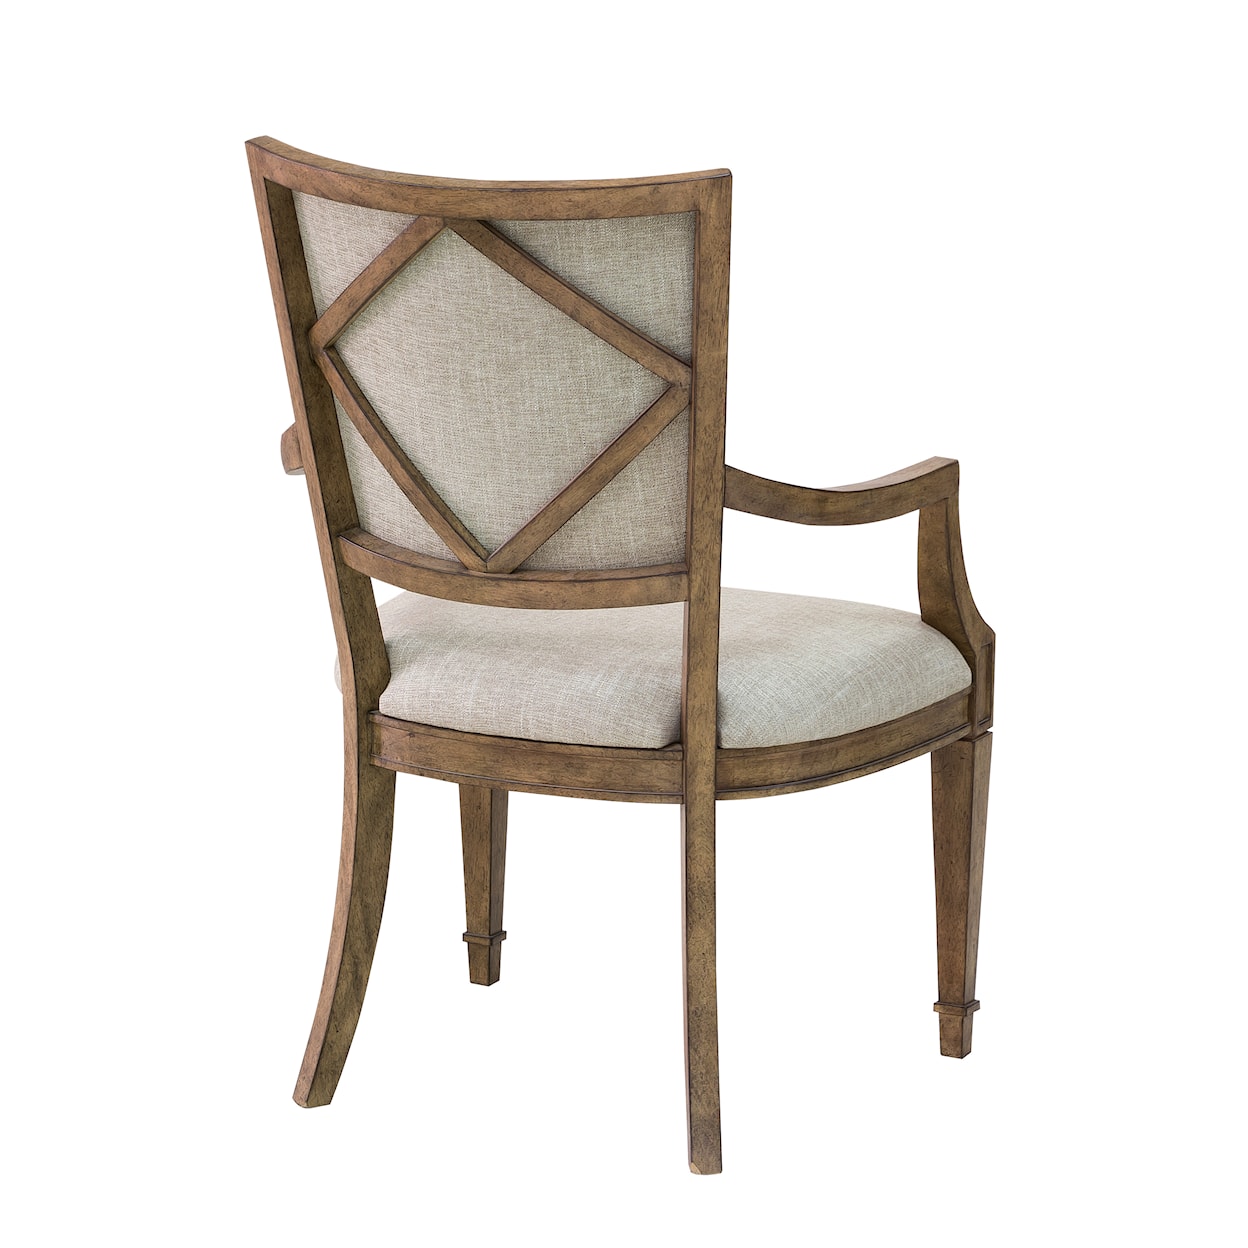 Pulaski Furniture Anthology Upholstered Arm Chair